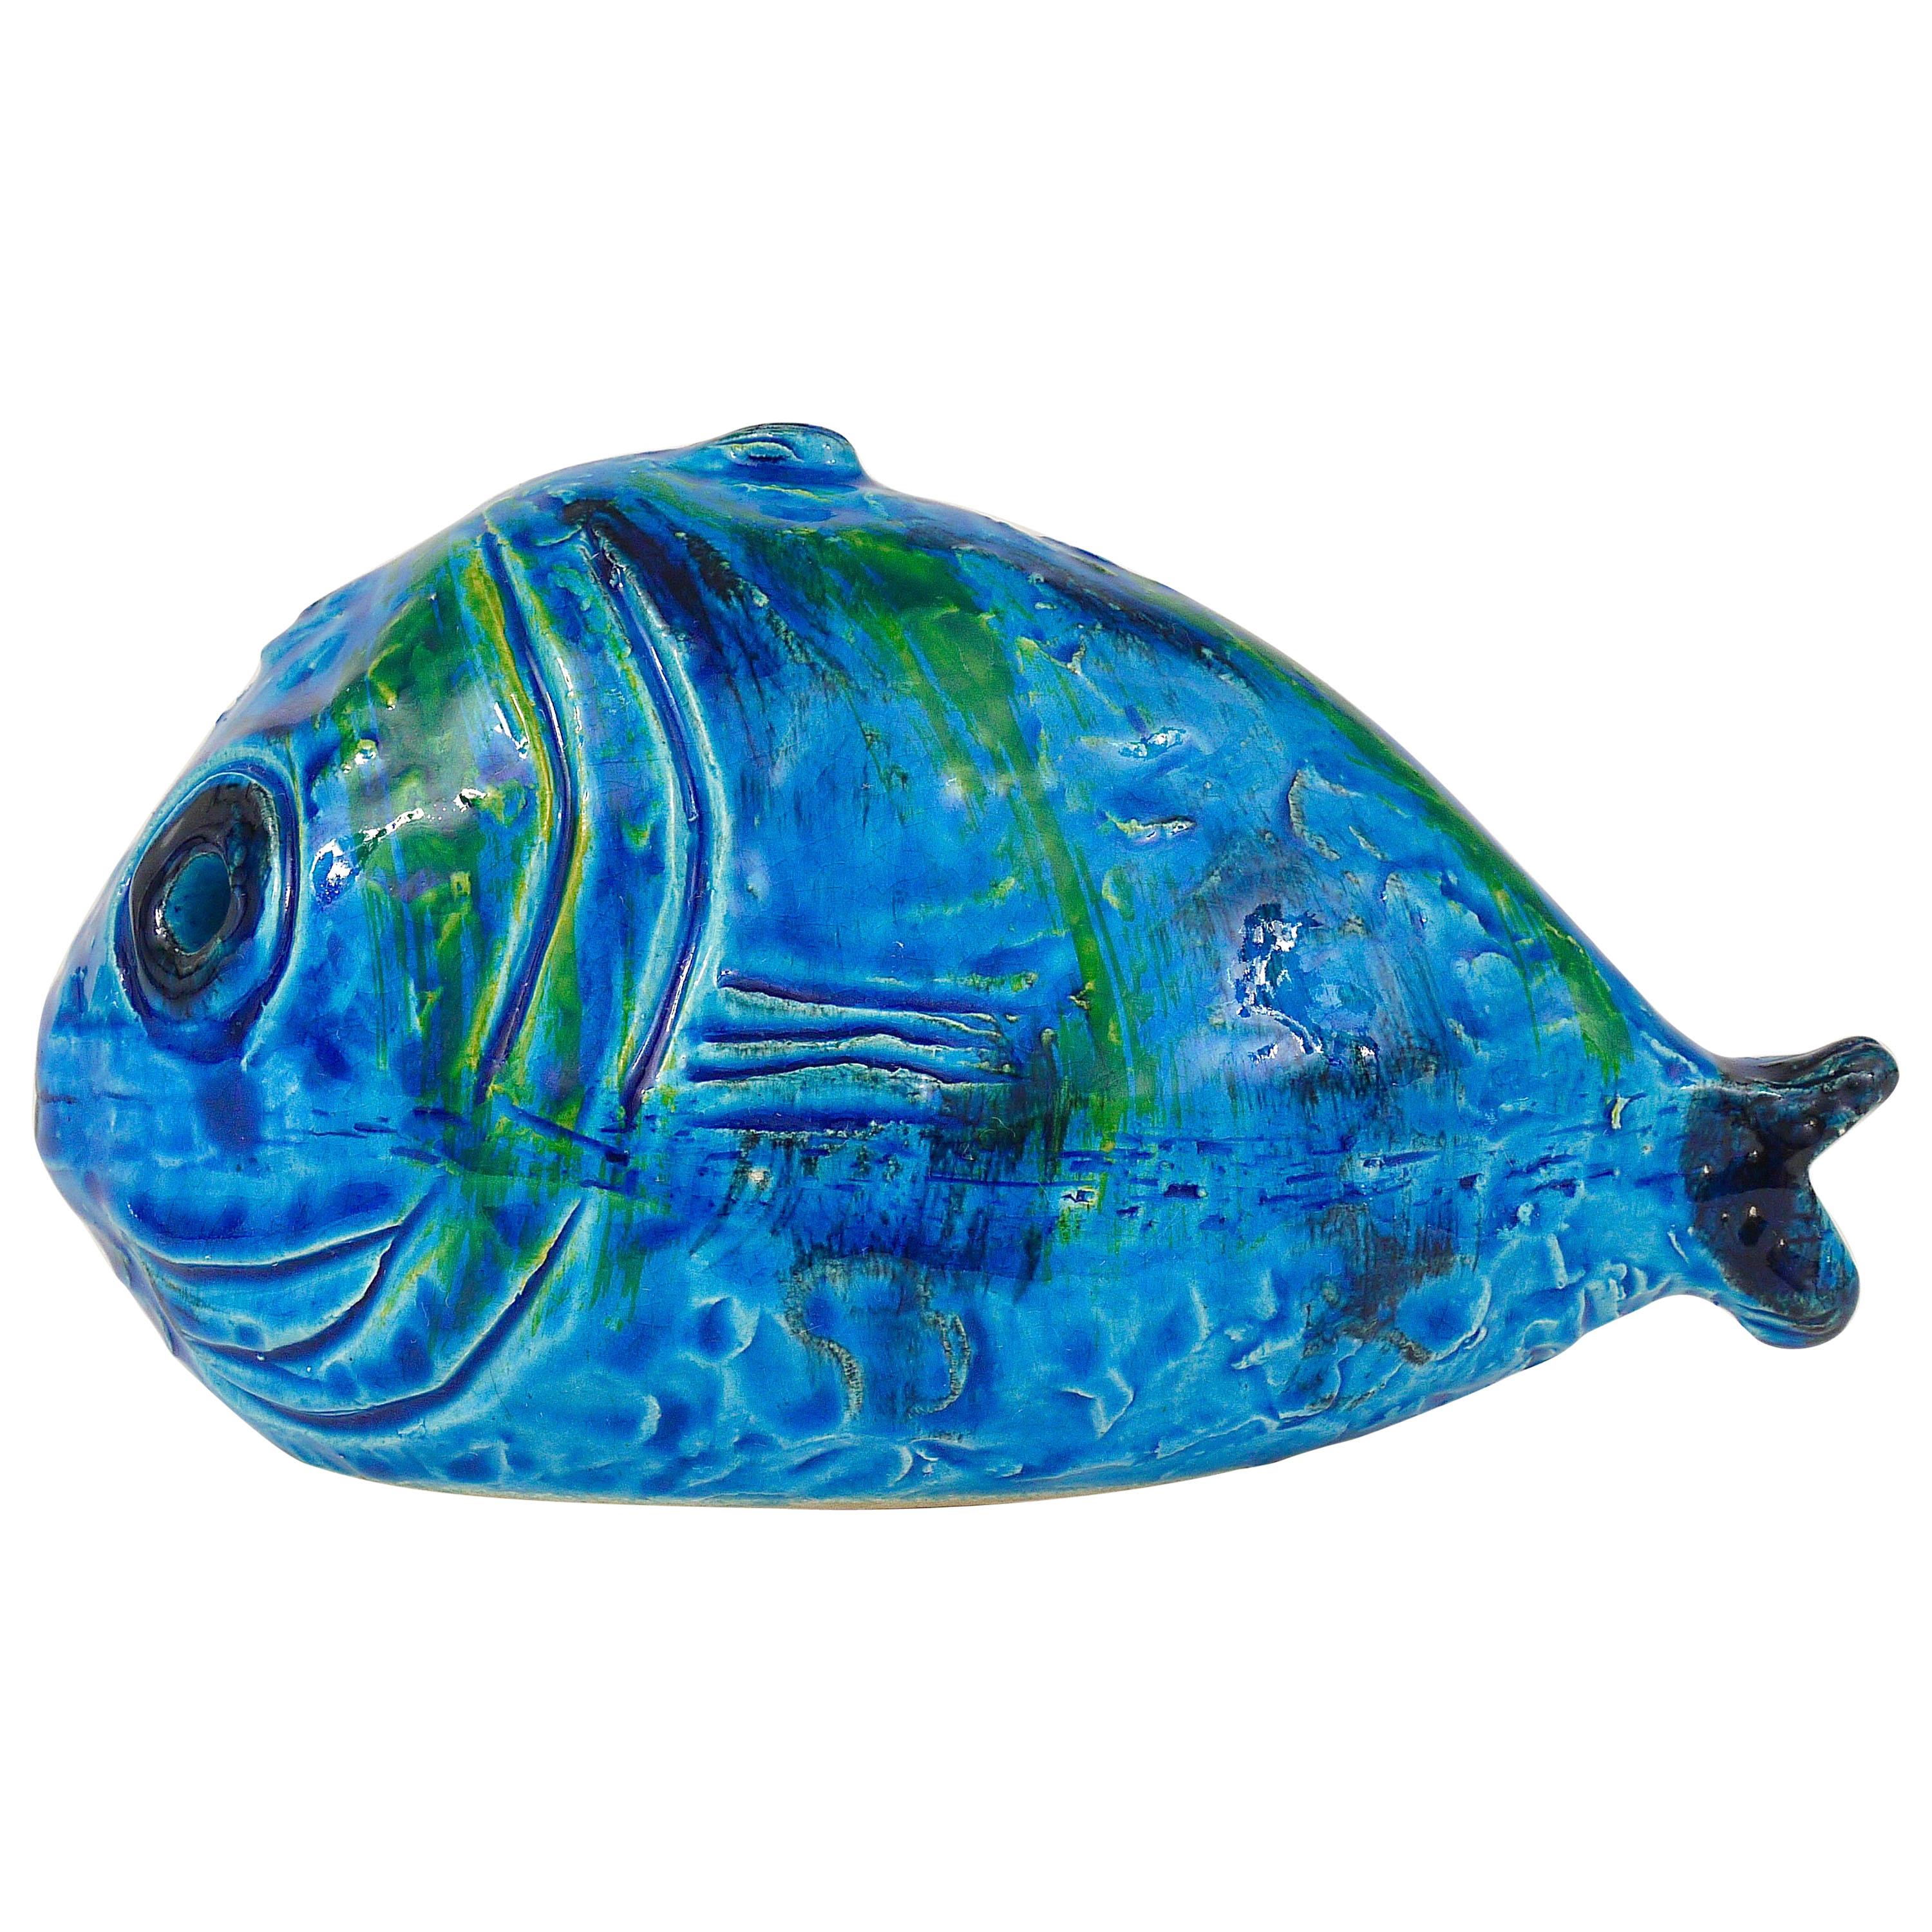 Aldo Londi Bitossi Rimini Blue Glazed Fish Sculpture Figurine, Italy, 1950s